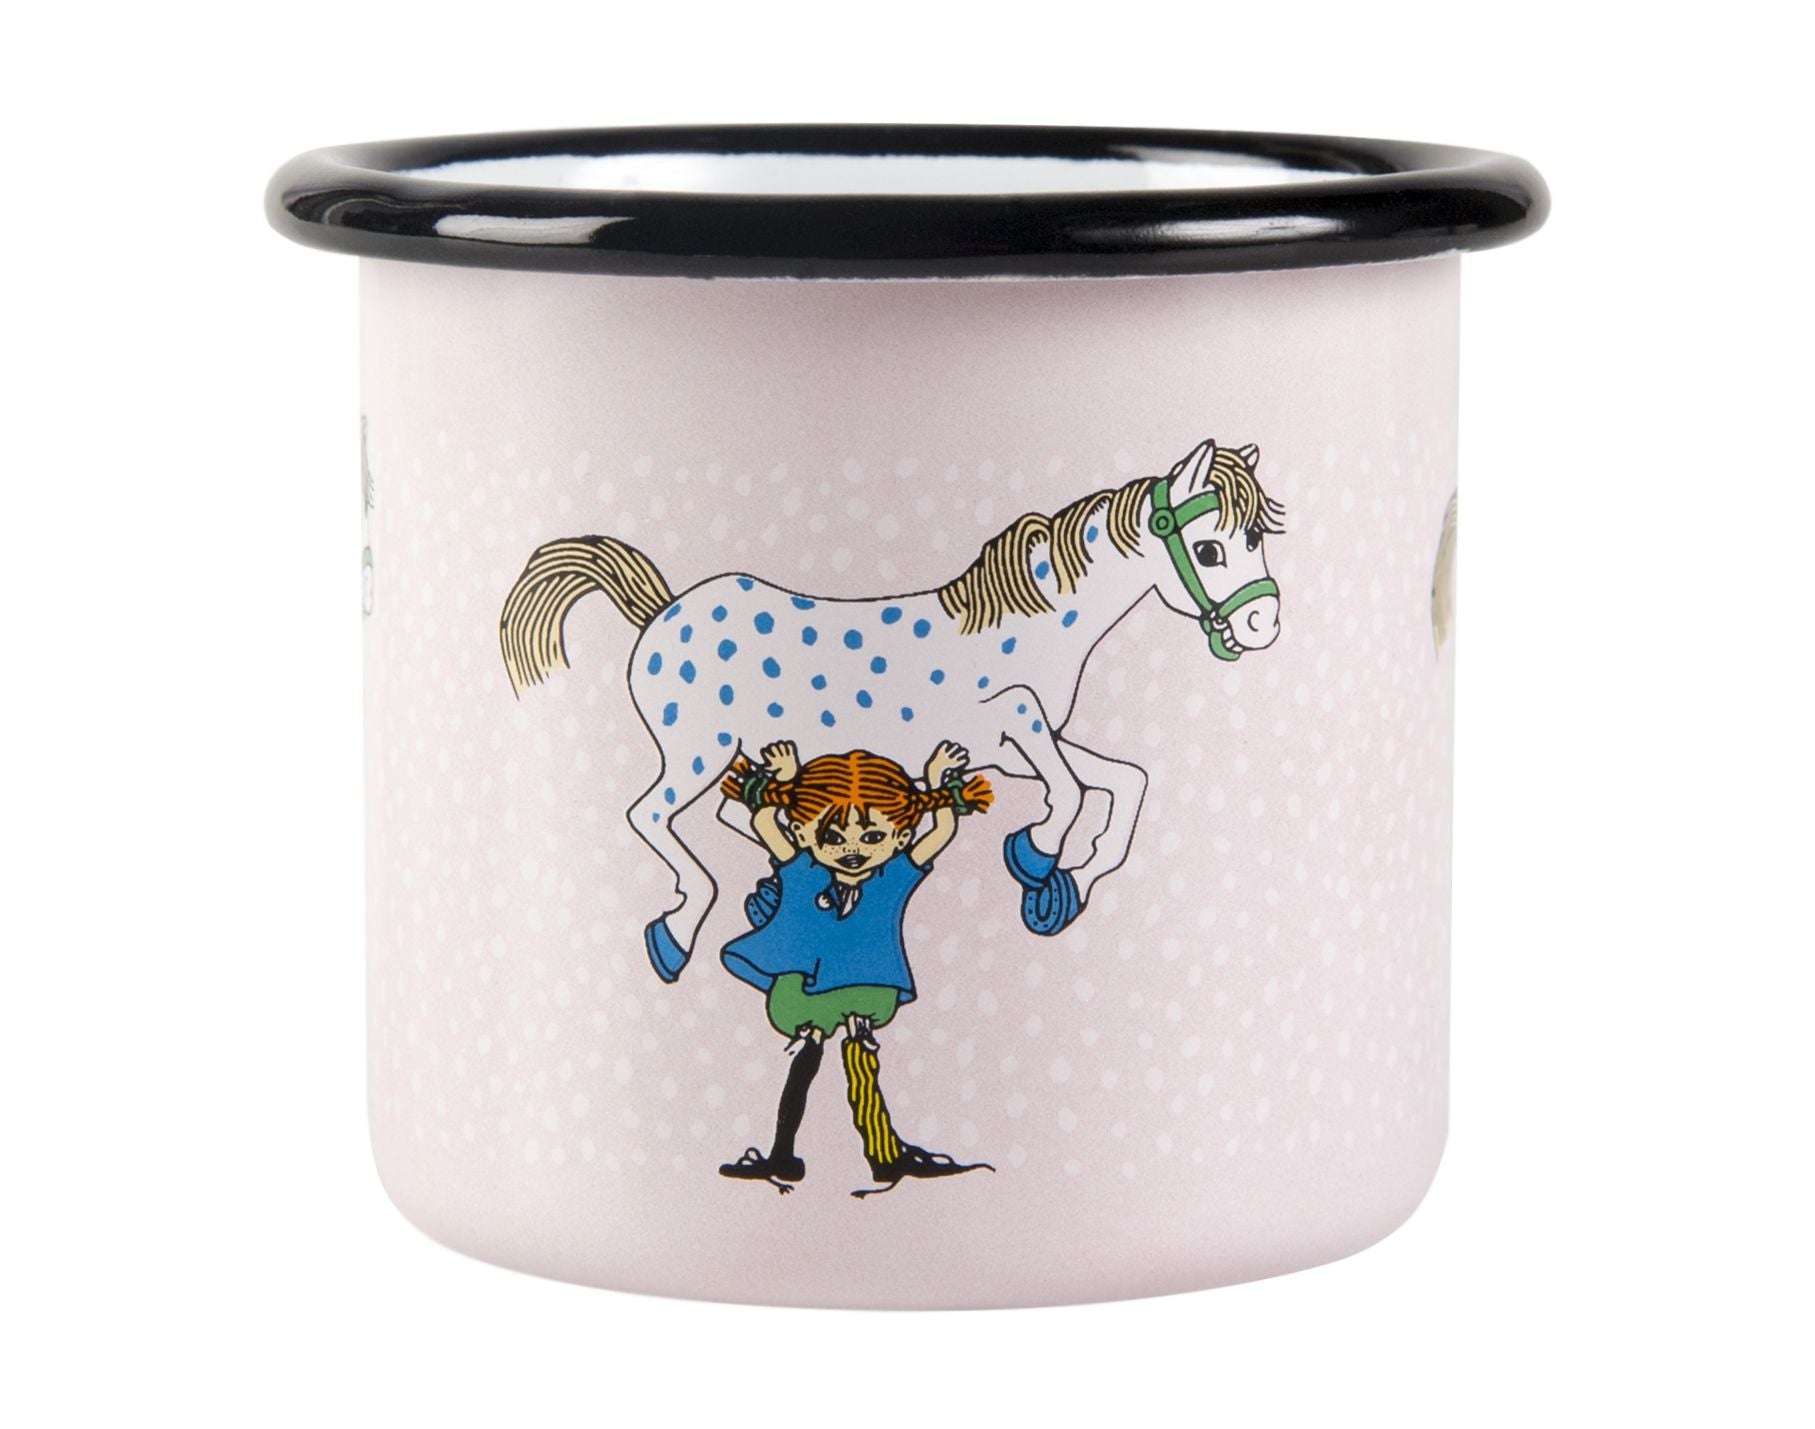 Muurla Pippi Longstocking Email Mug, Pippi et le cheval, rose